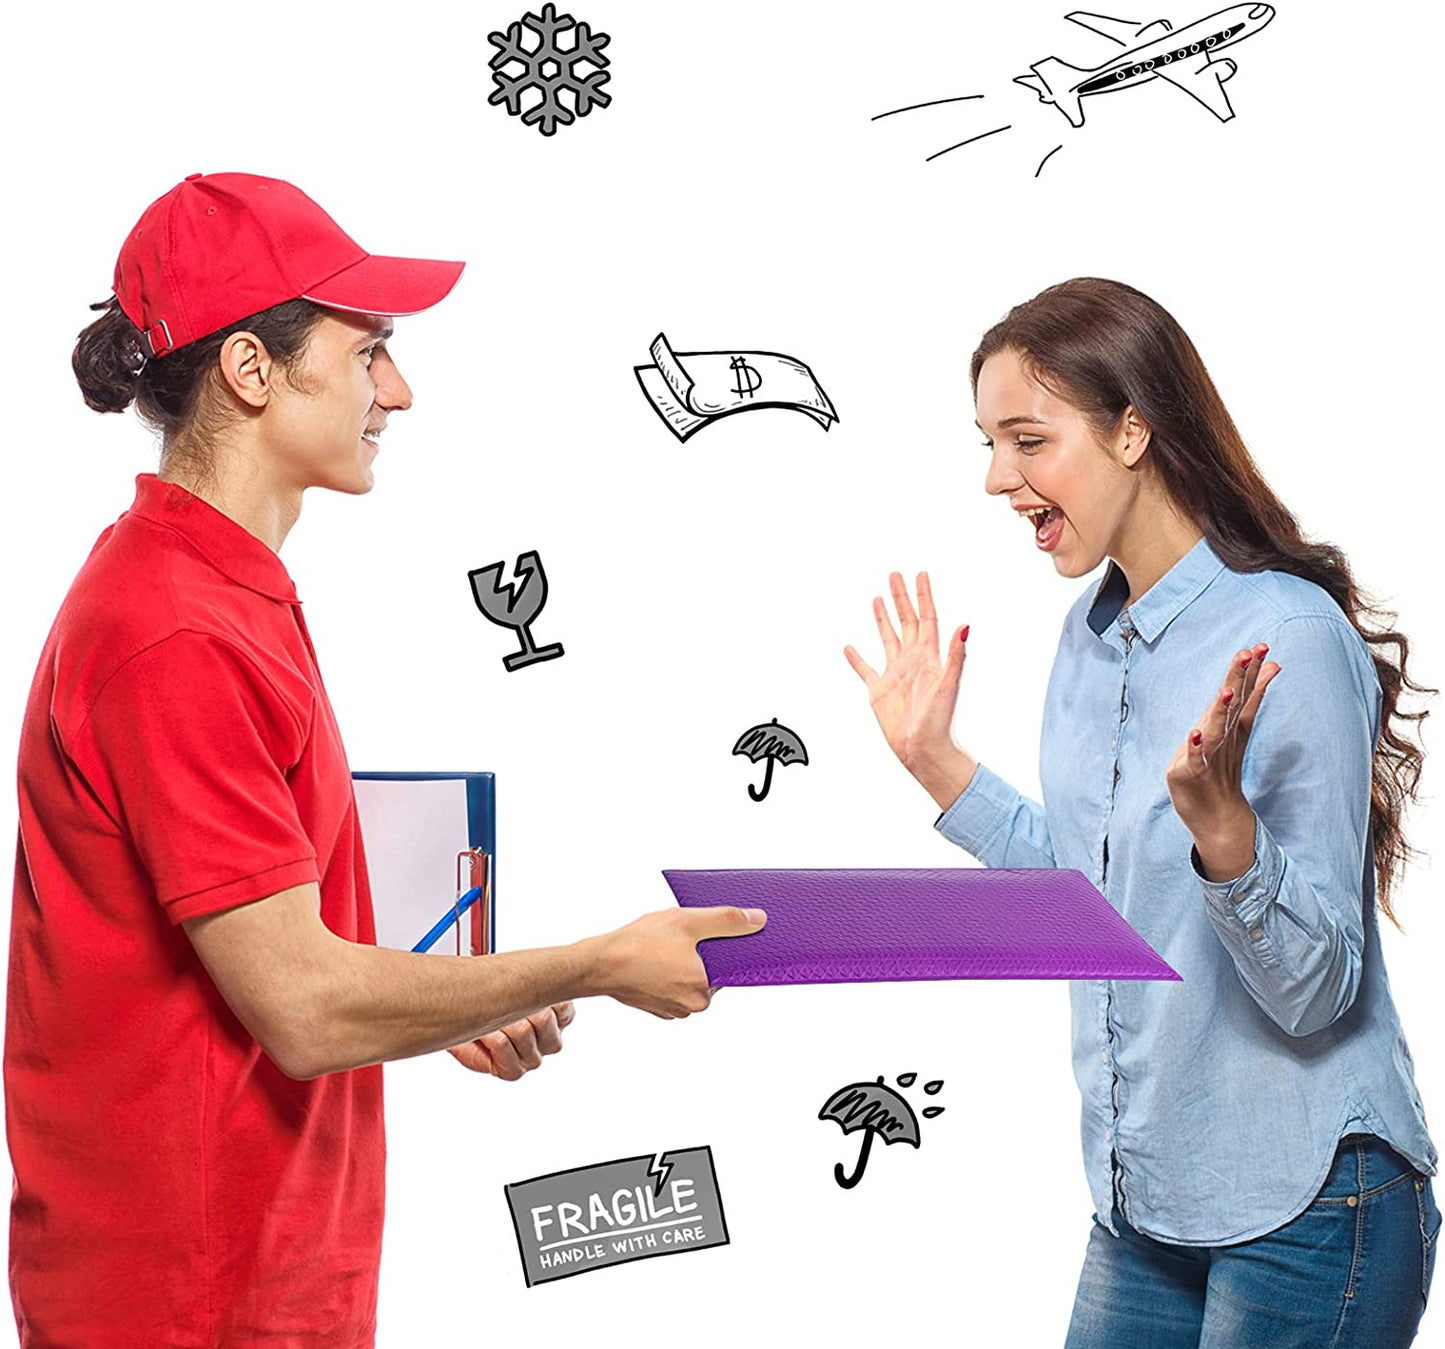 10.5x16 Bubble-Mailer Padded Envelope | Purple